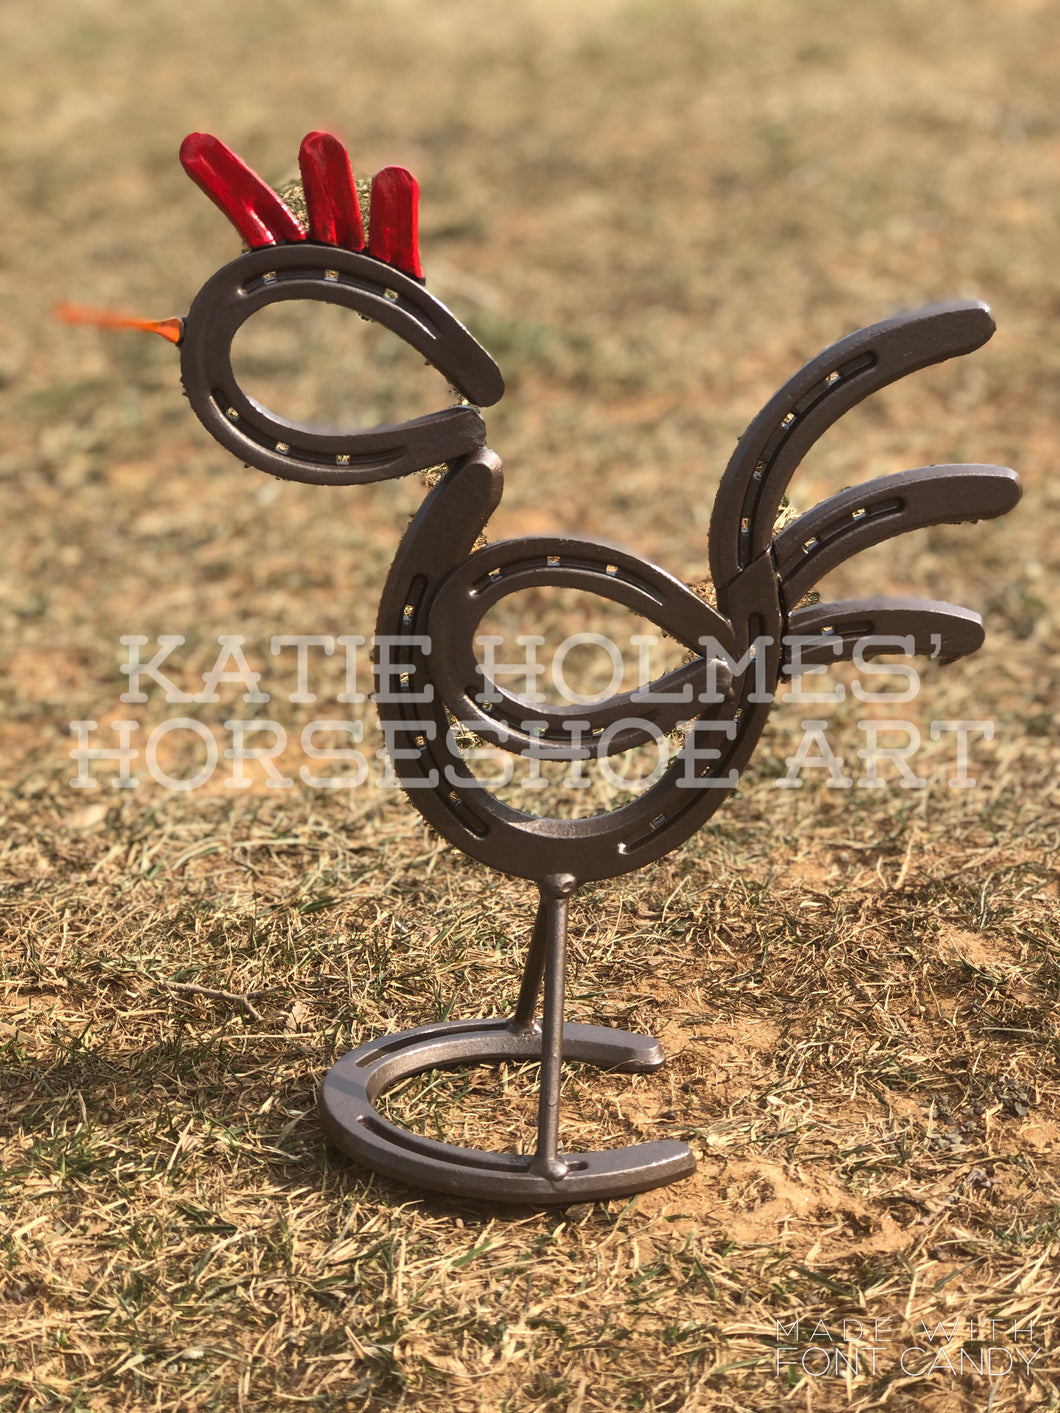 Horseshoe Chicken – Katie Holmes' Horseshoe Art